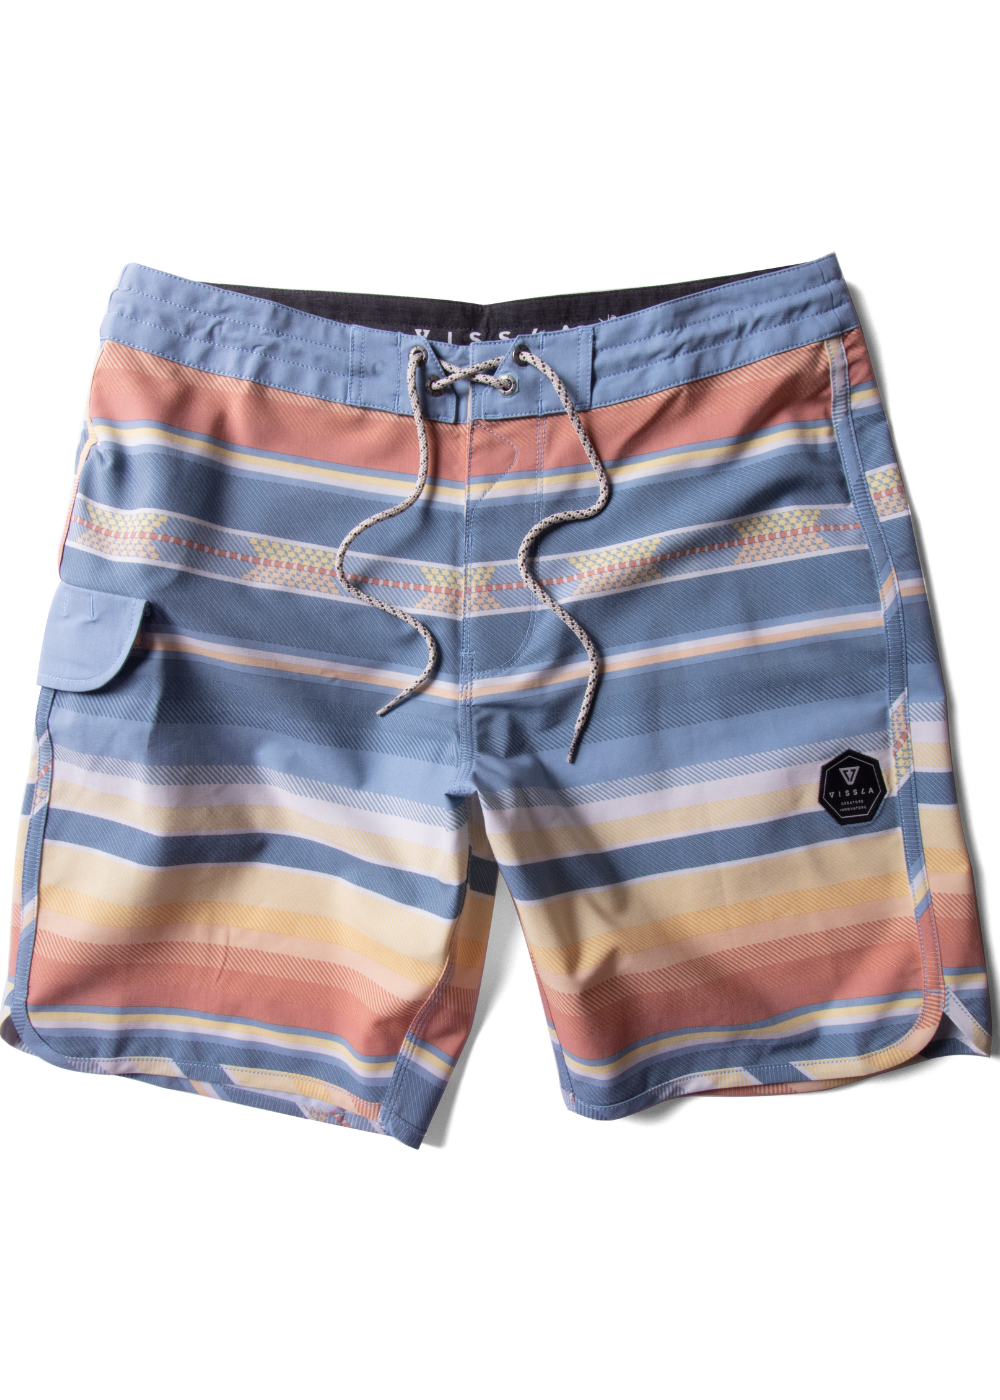 Big Sun Beachwear and Tanning | Beachwear, Swimwear, Apparel